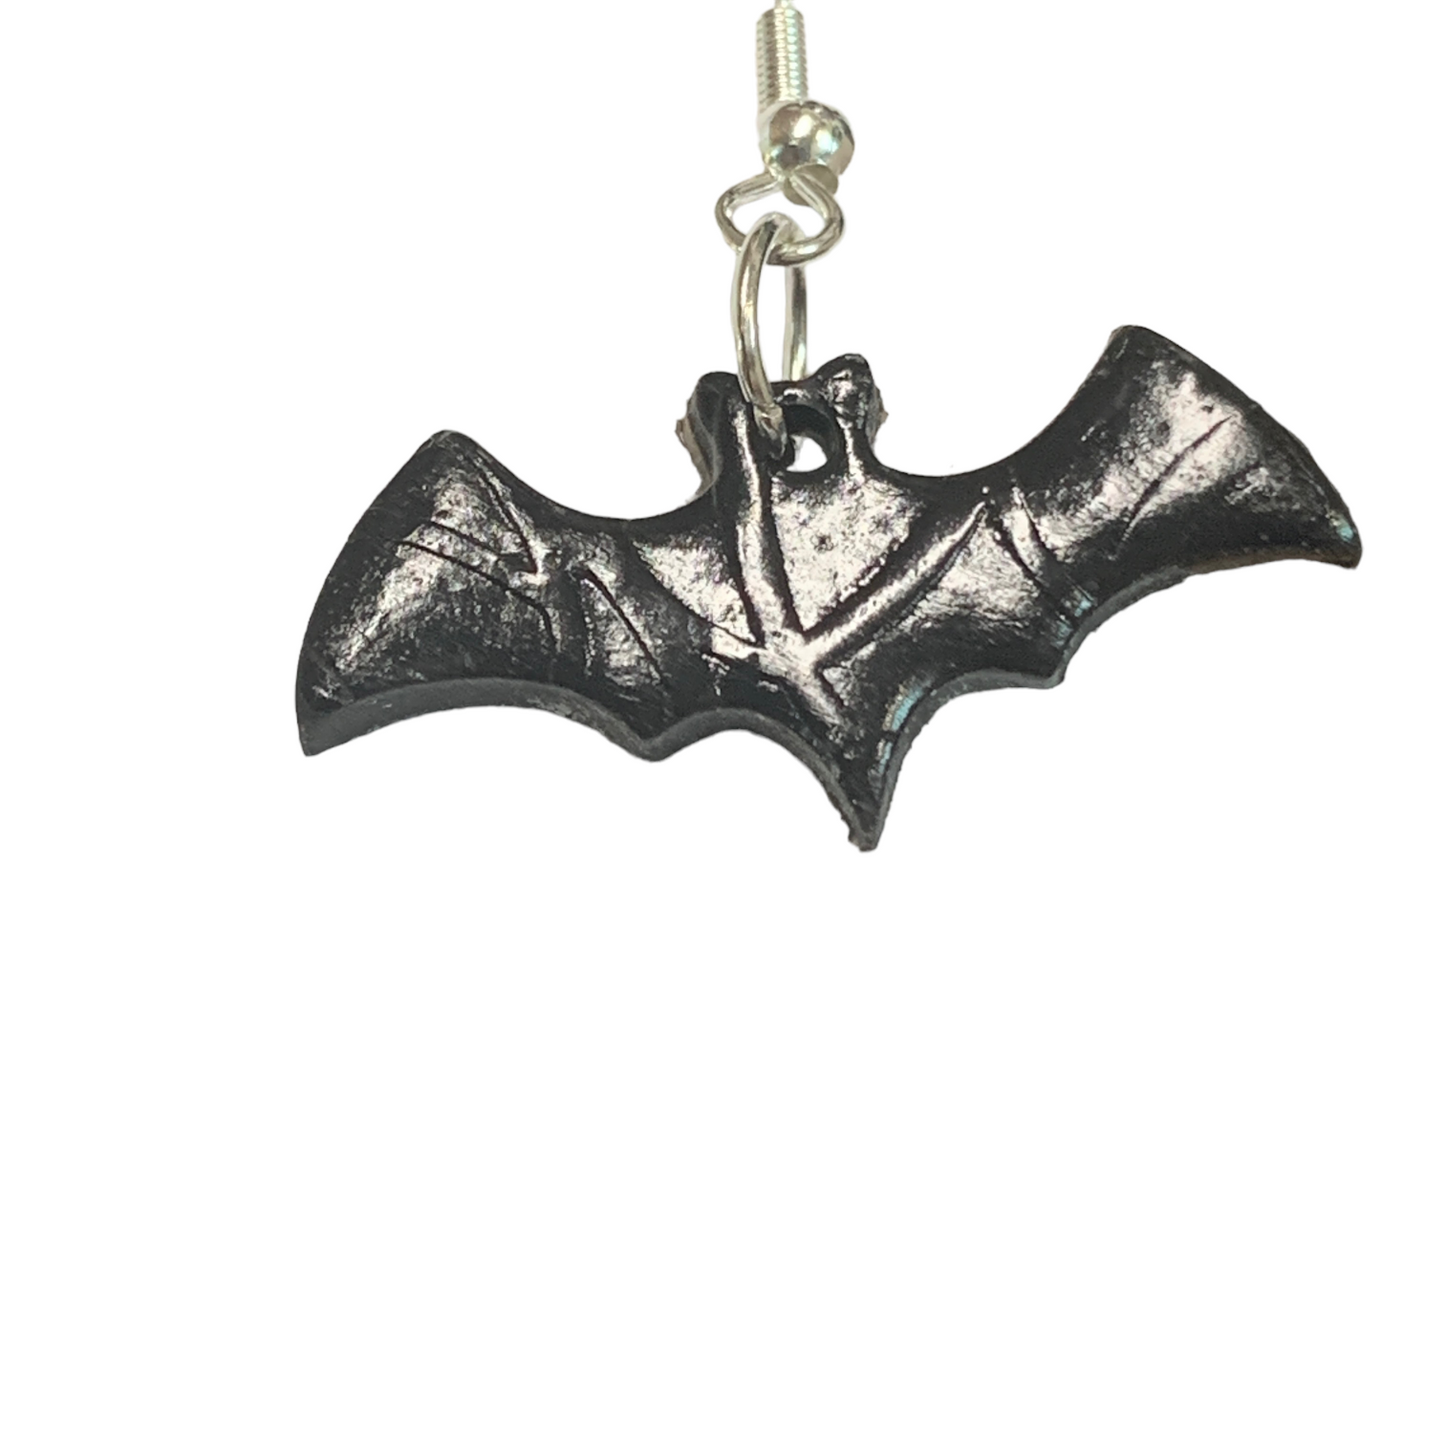 Hypoallergenic Textured Black Bats Dangle Earrings